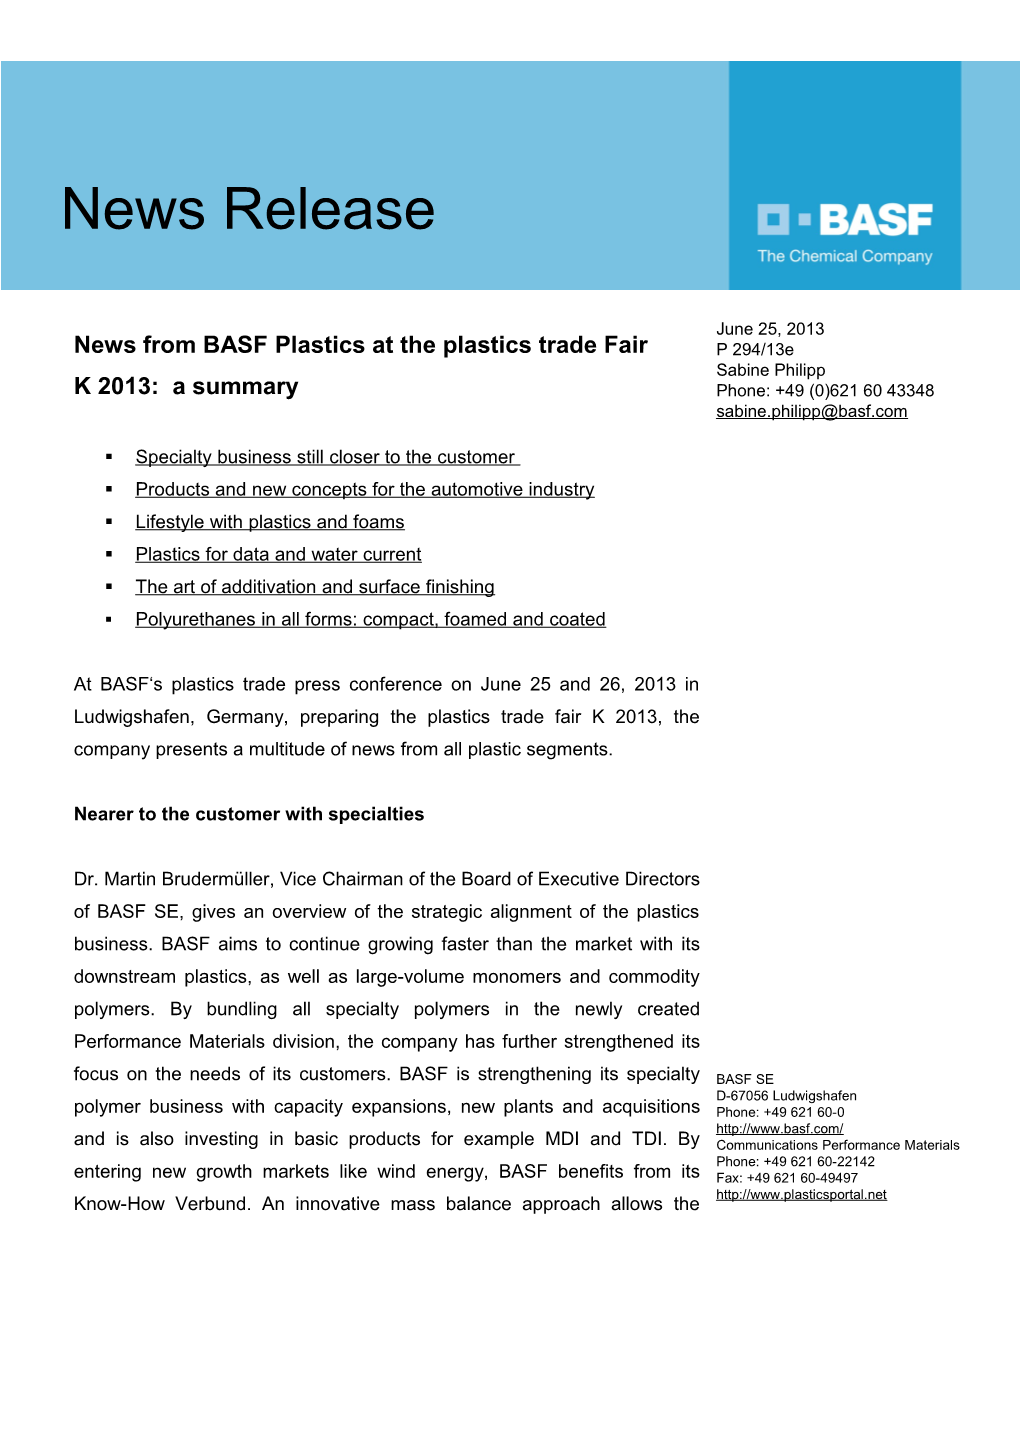 News from BASF Plastics at the Plastics Trade Fair K2013: a Summary